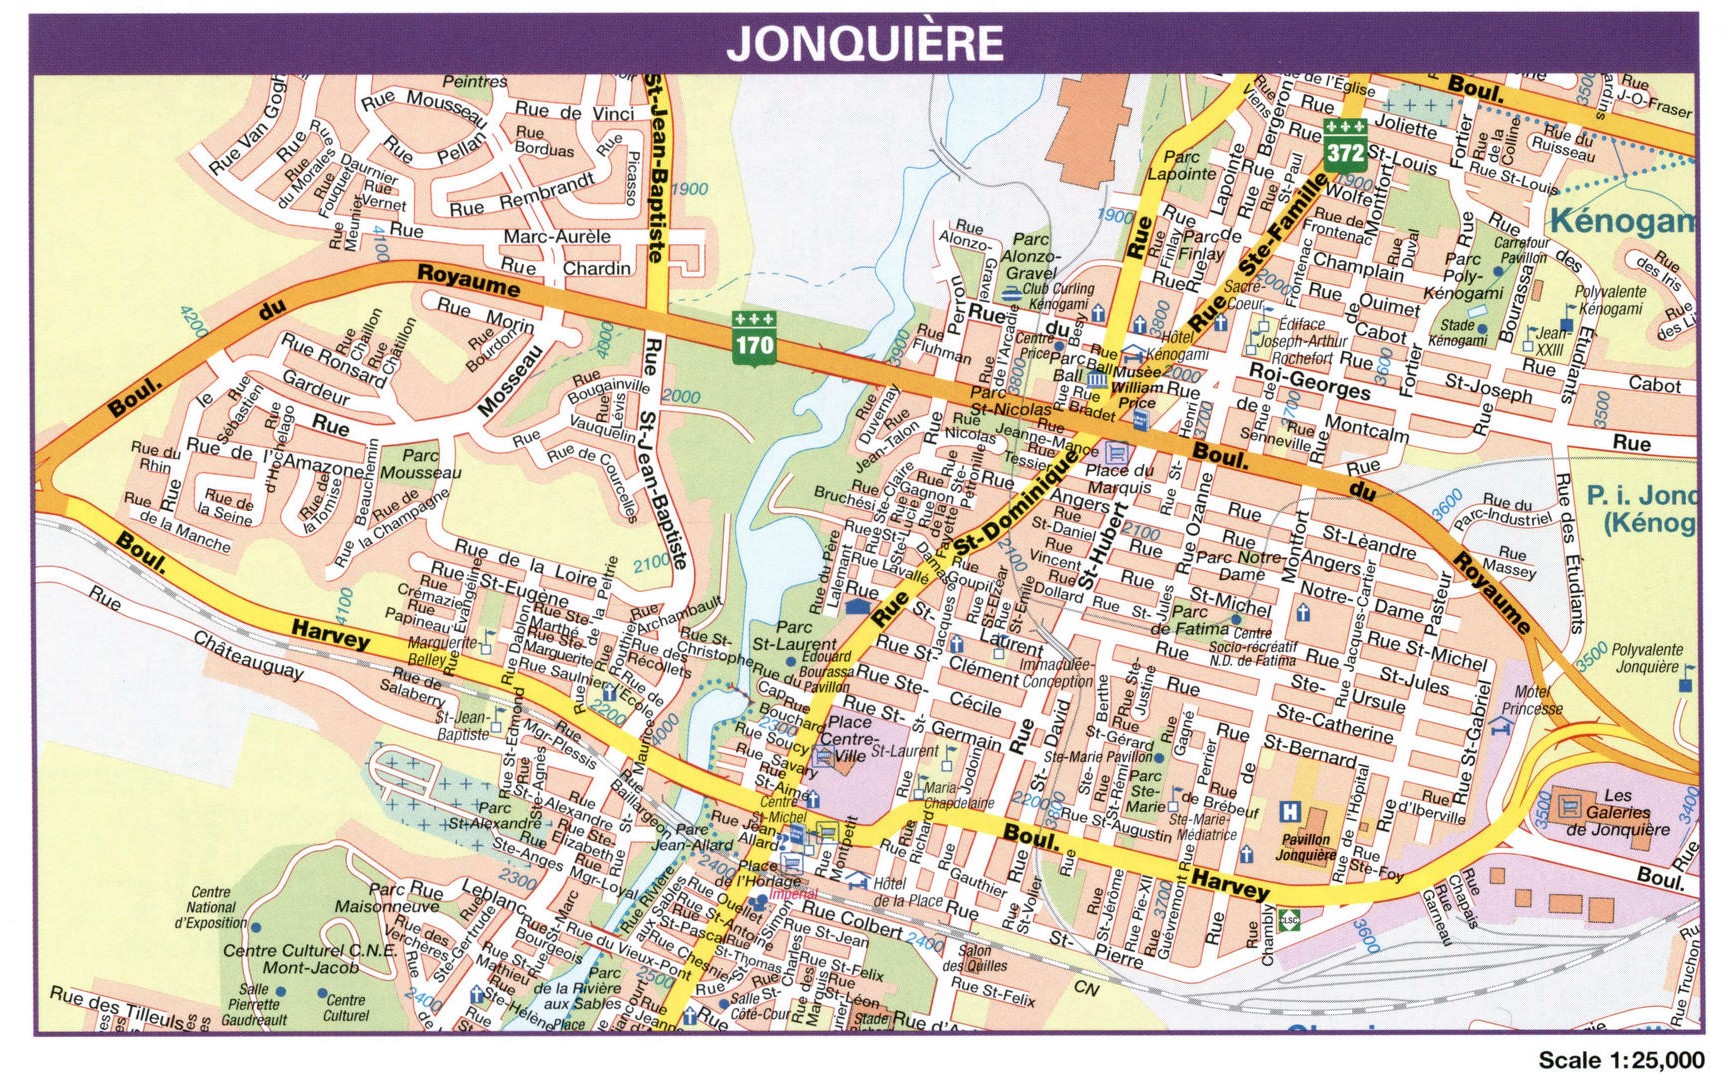 Jonquiere city map